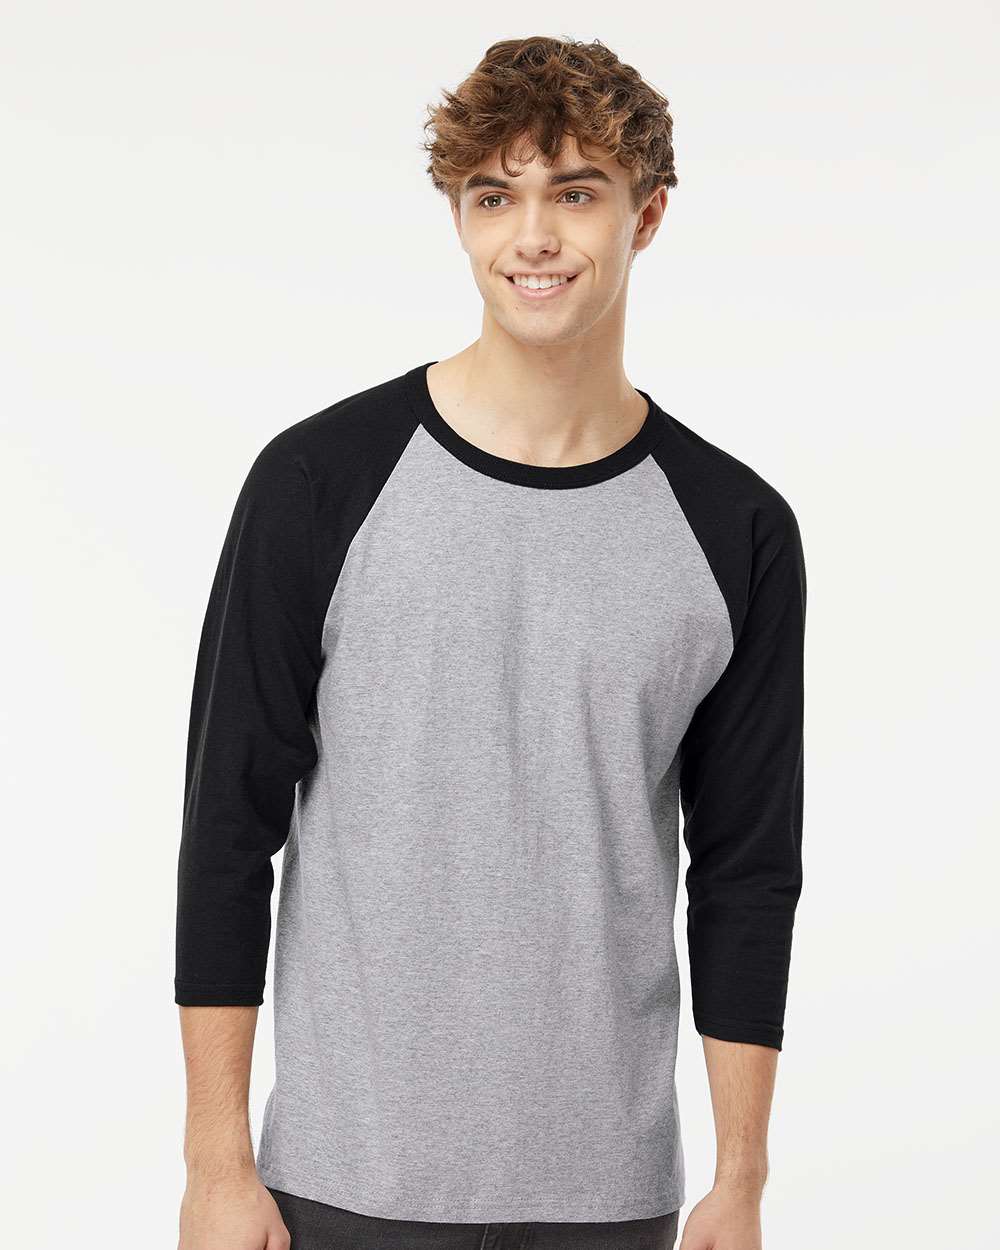 M&O Raglan Three-Quarter Sleeve Baseball T-Shirt 5540 #colormdl_Sport Grey/ Black